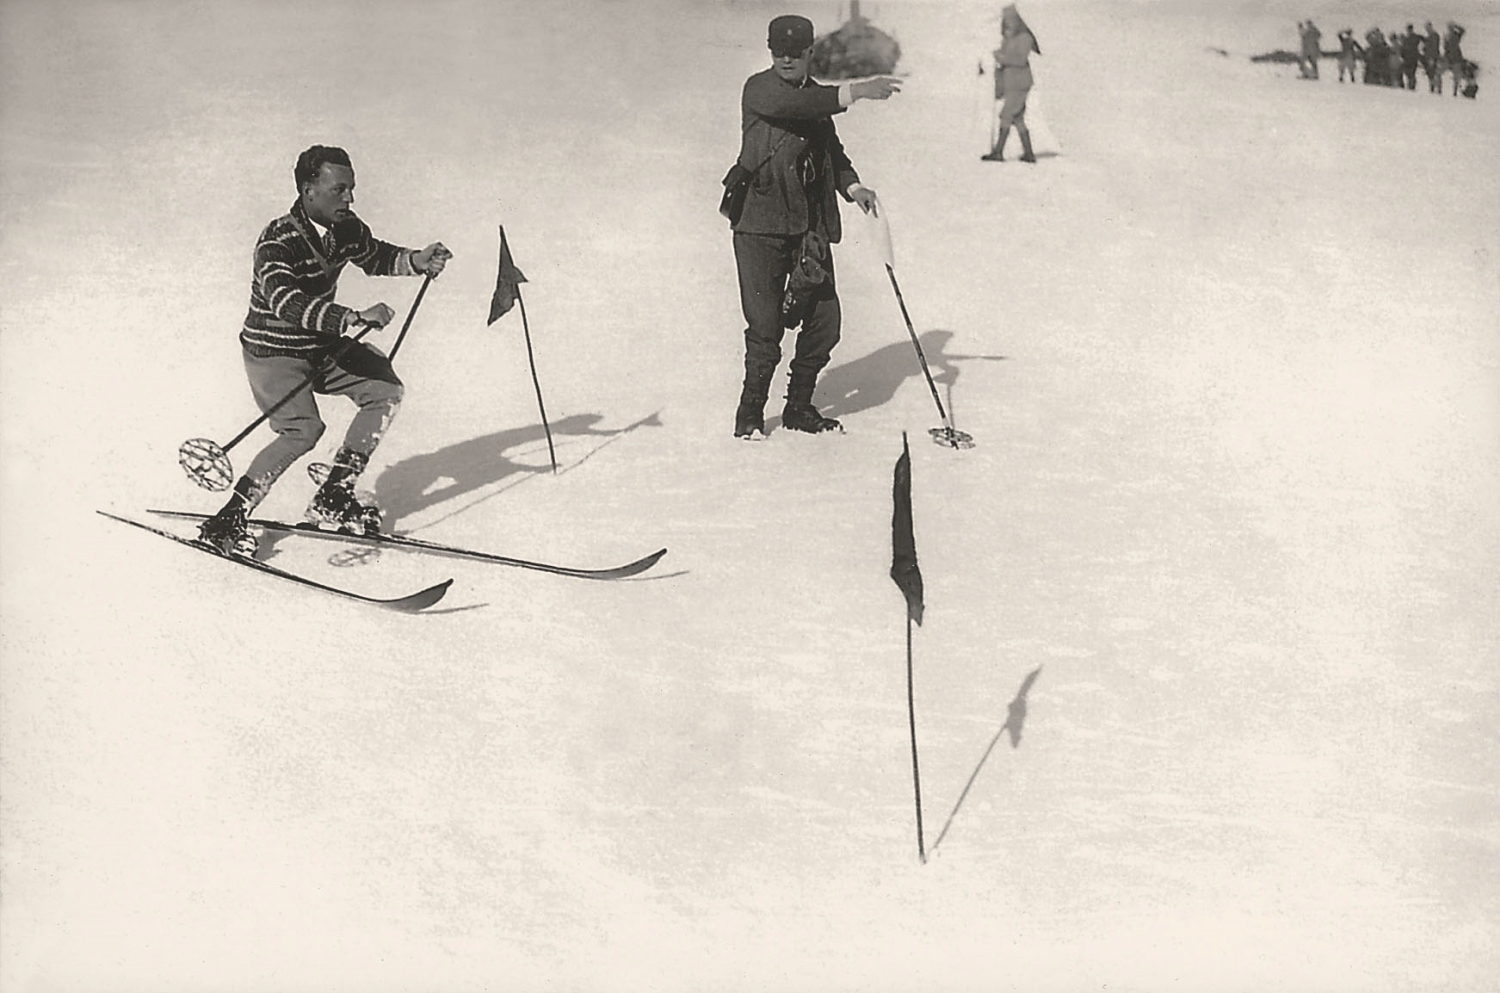 Old photo of skier doing slalom skiing in Murren